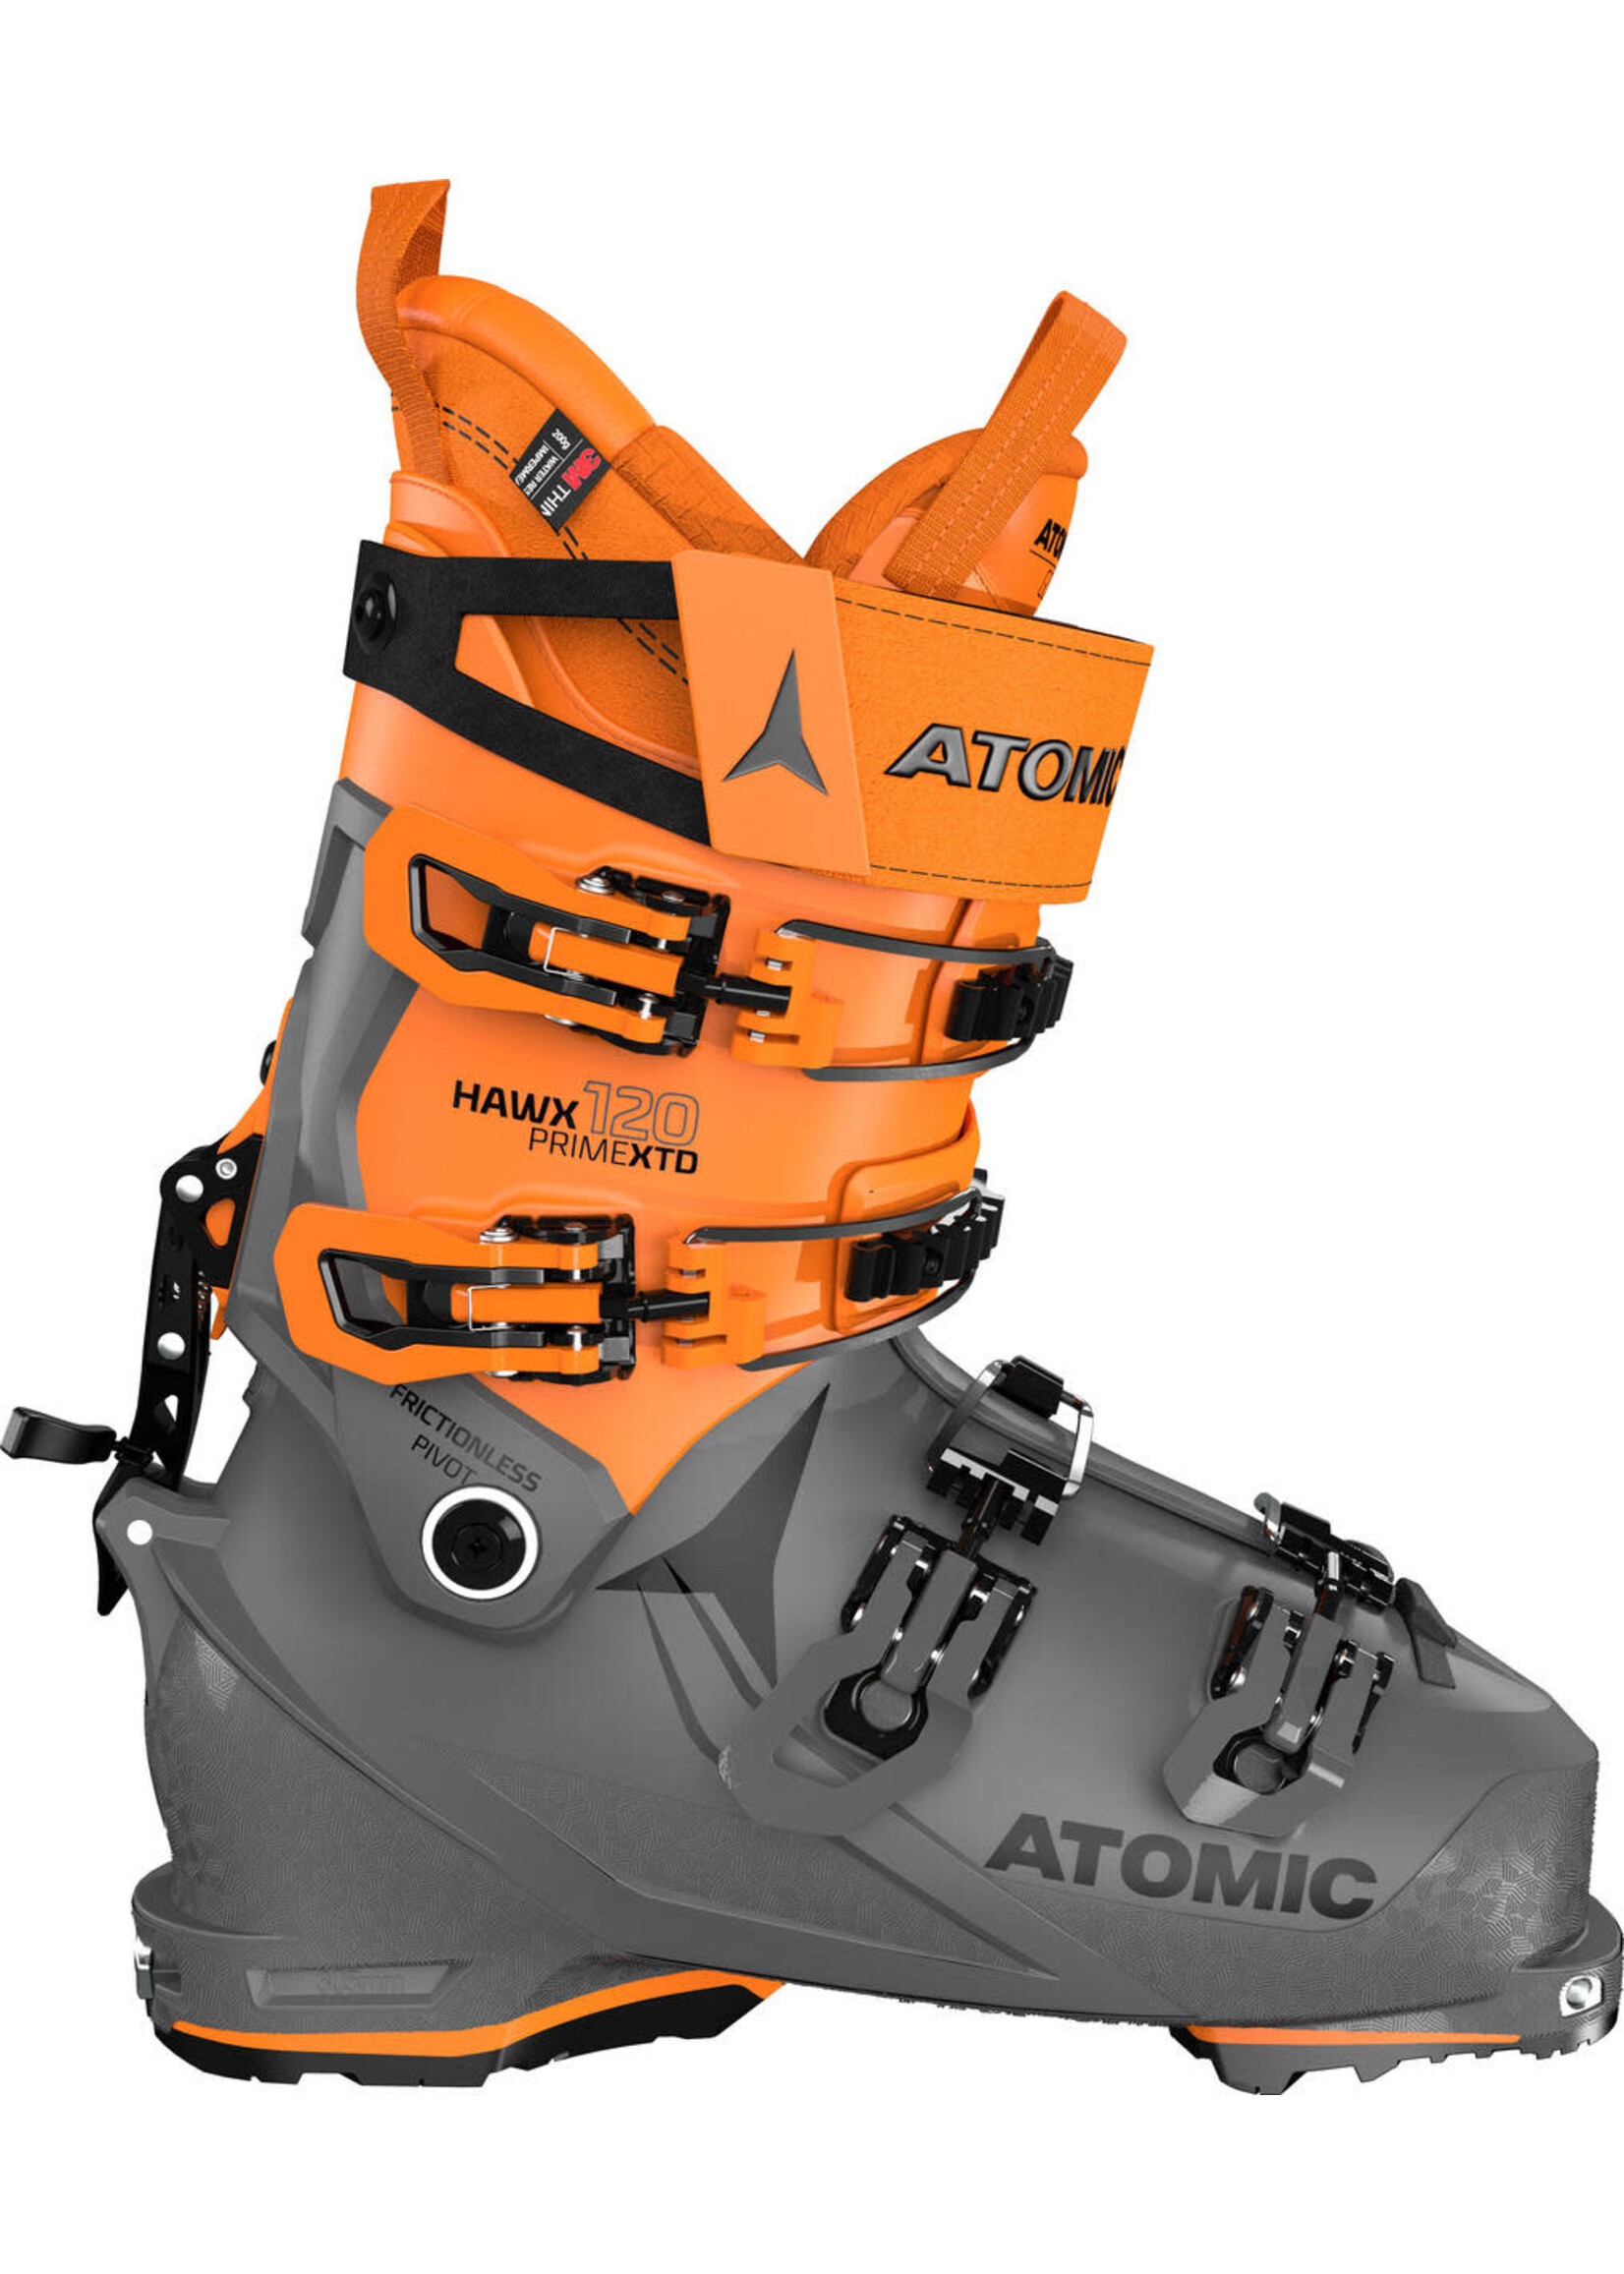 Atomic XTD Hawx  Prime 120